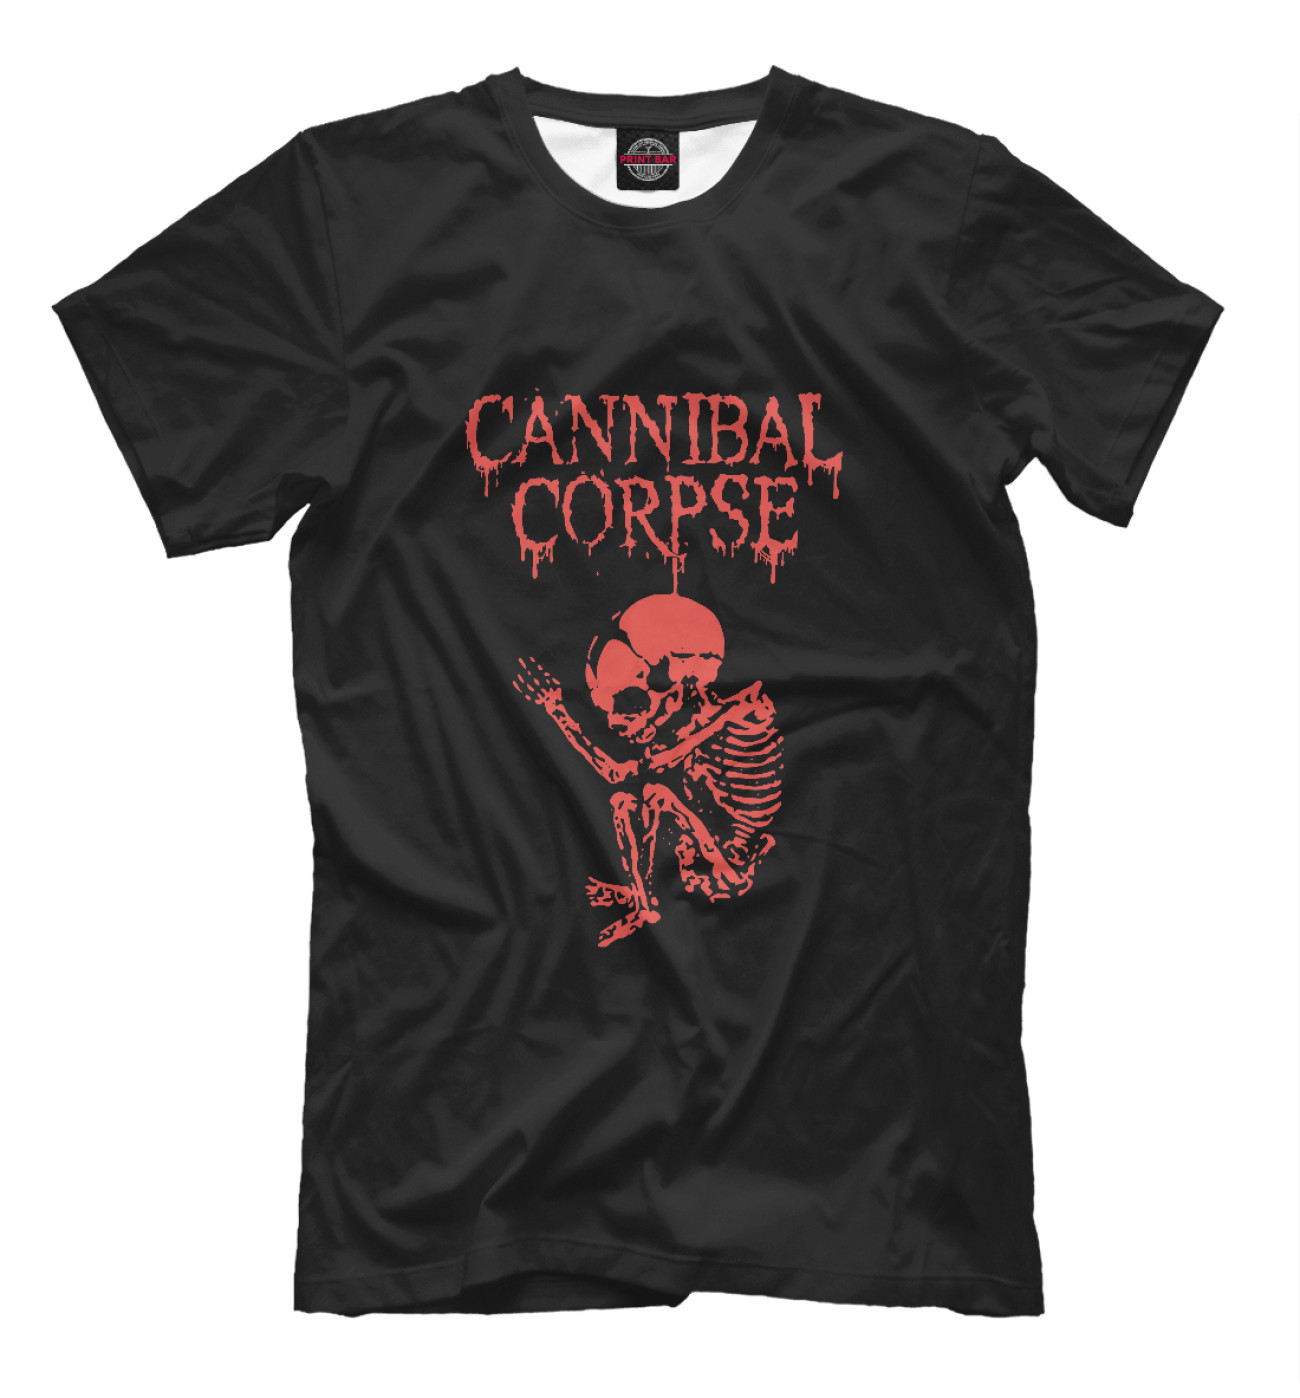 Мужская Футболка Cannibal Corpse, артикул: CCR-552556-fut-2